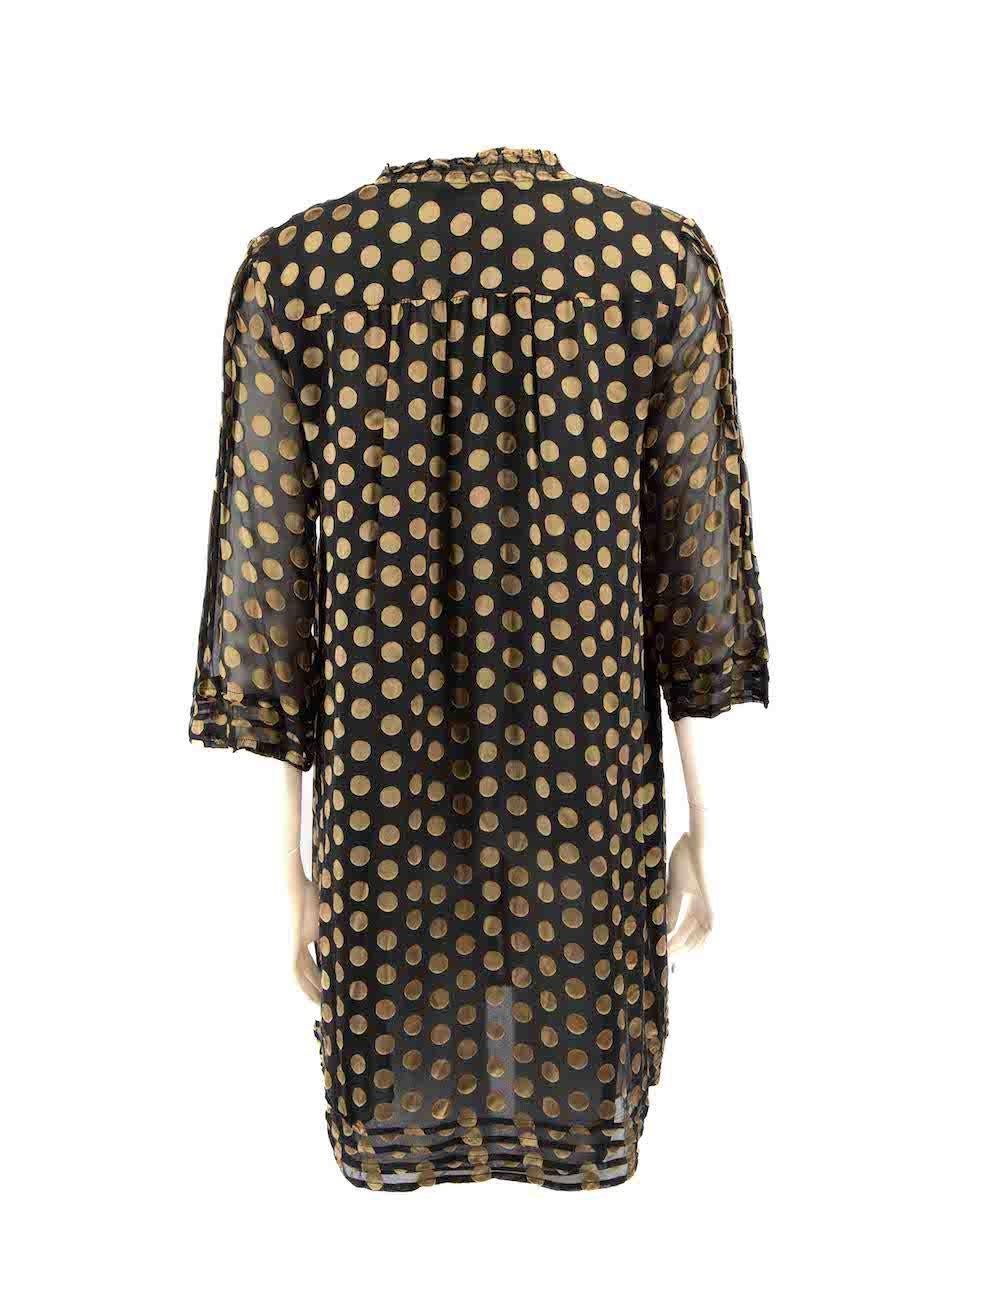 Diane Von Furstenberg Black Polkadot Pattern Dress Size XS In Good Condition For Sale In London, GB